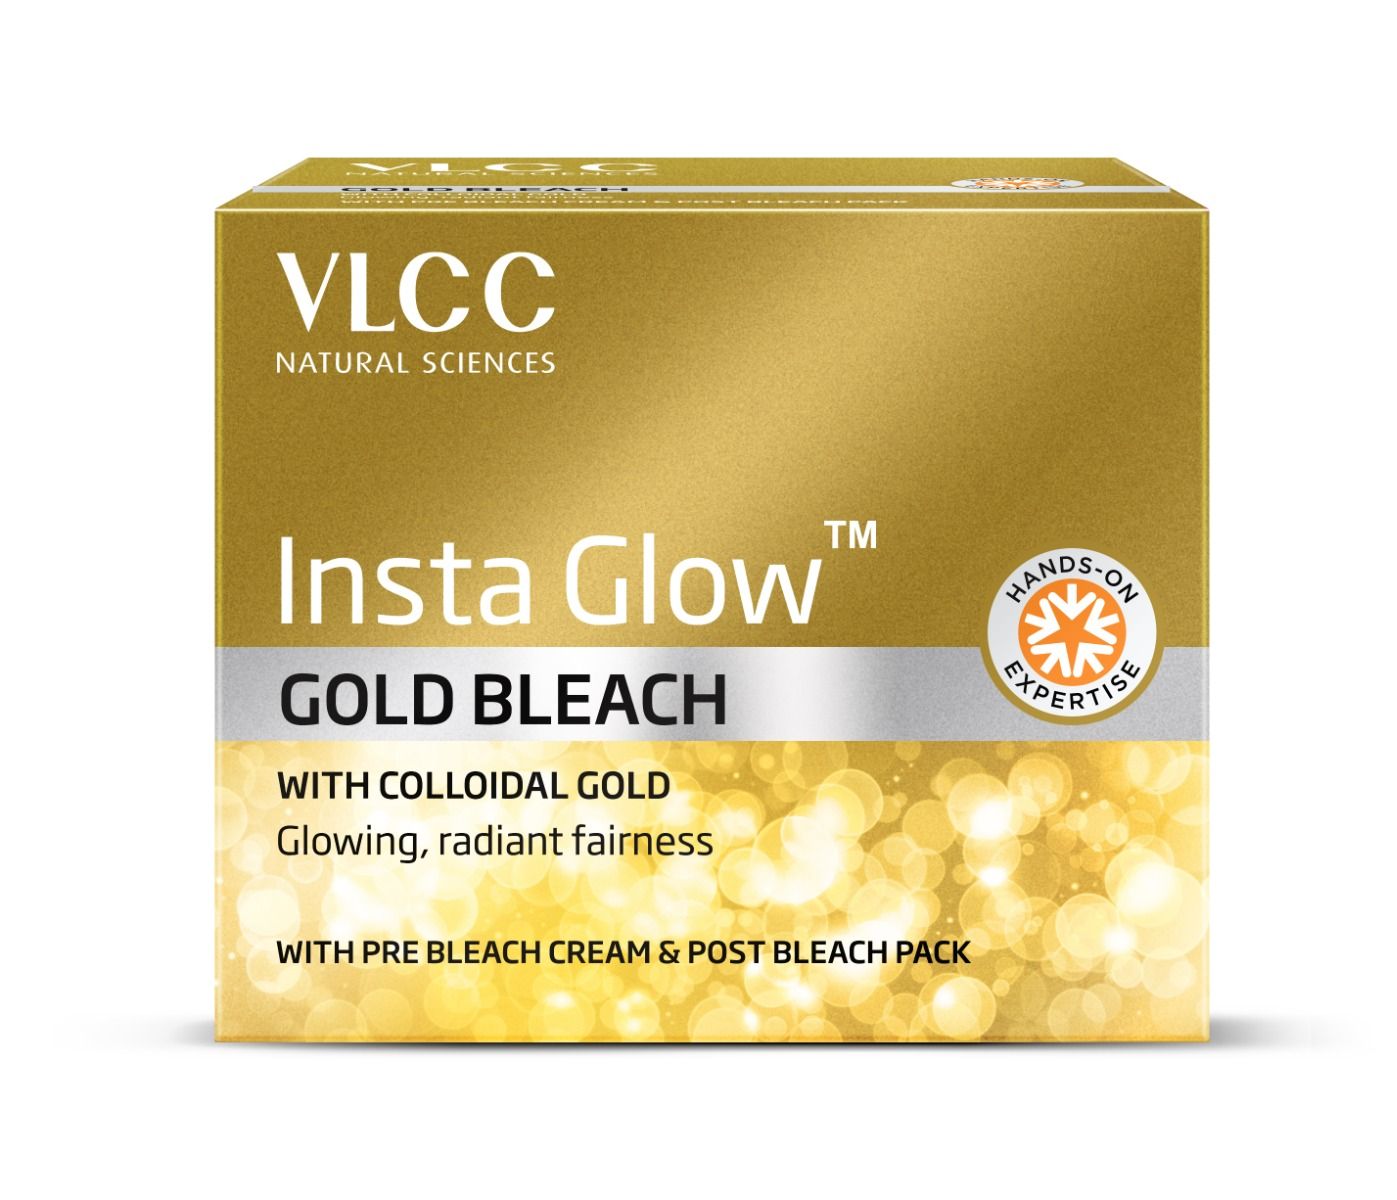 Buy VLCC Insta Glow Gold Bleach, 30 gm Online